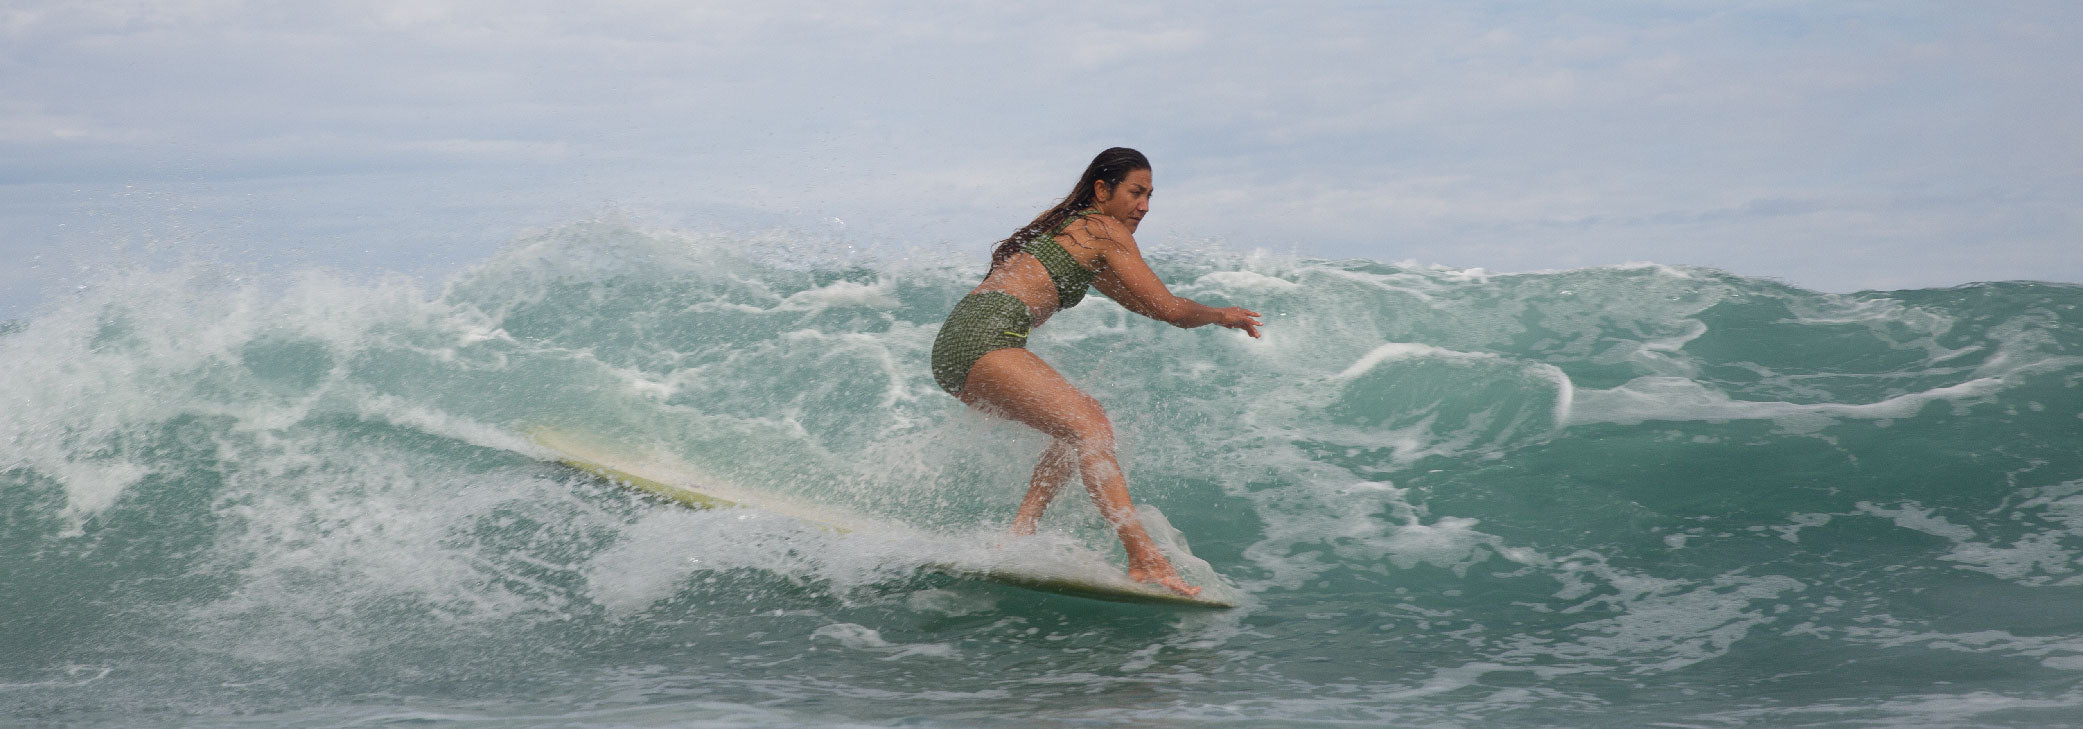 surf longboard Mexico women surf trip bikini vintage green